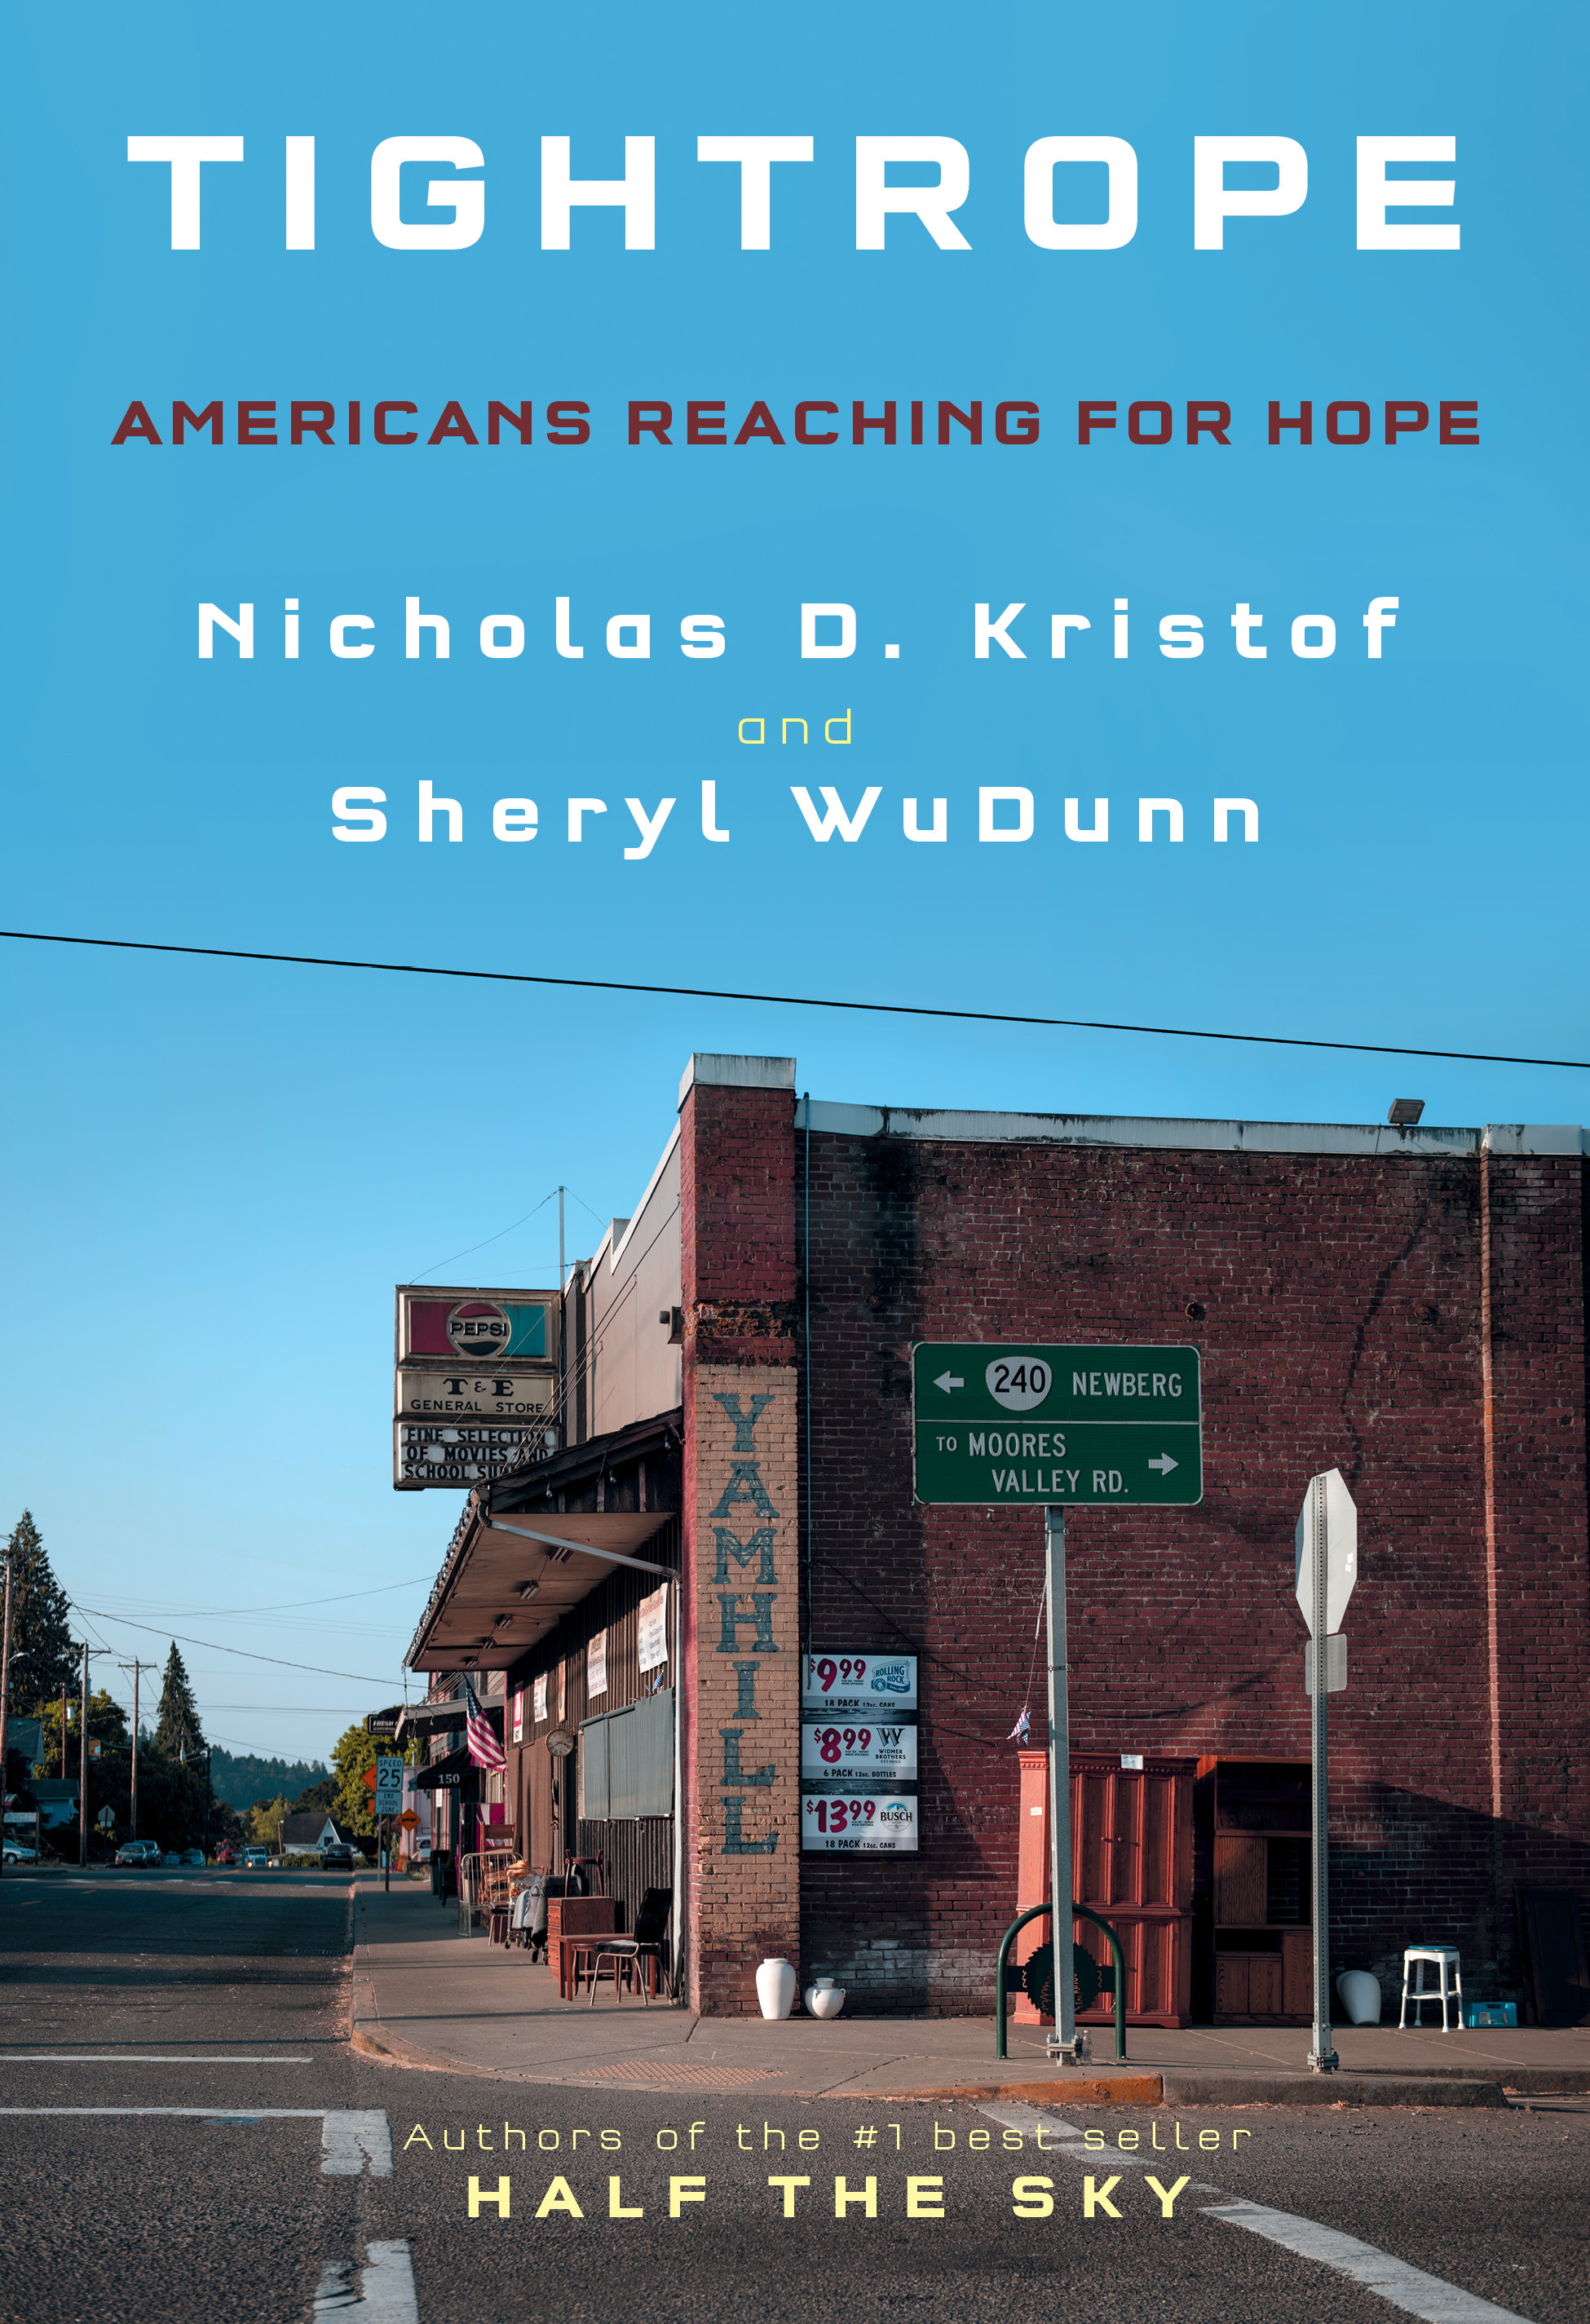 'Tightrope' by Nicholas D. Kristof and Sheryl WuDunn